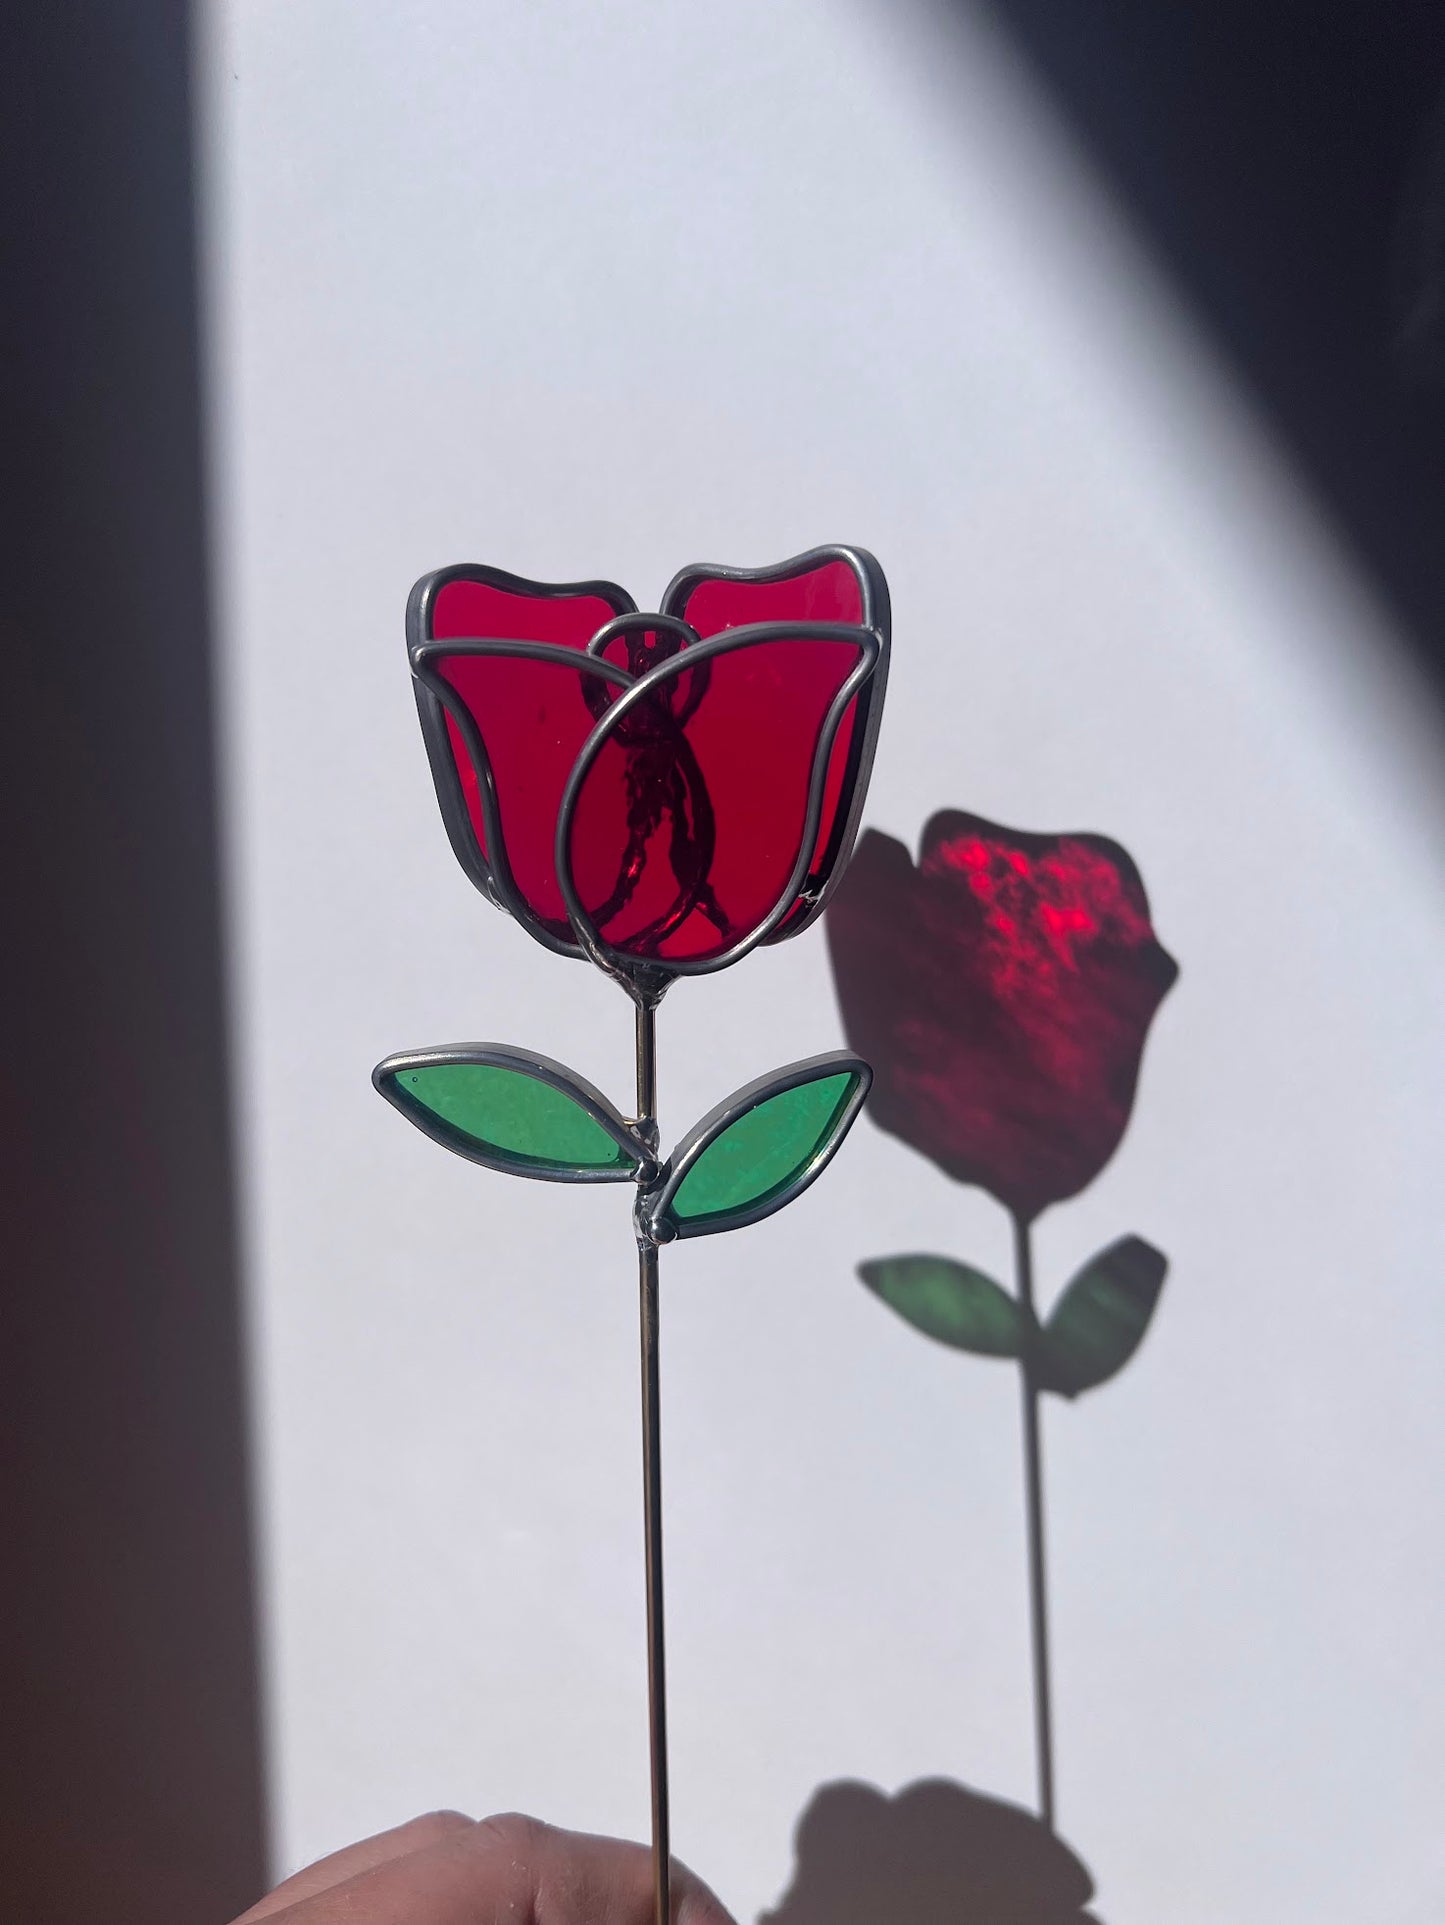 Deep Ruby Red Rose